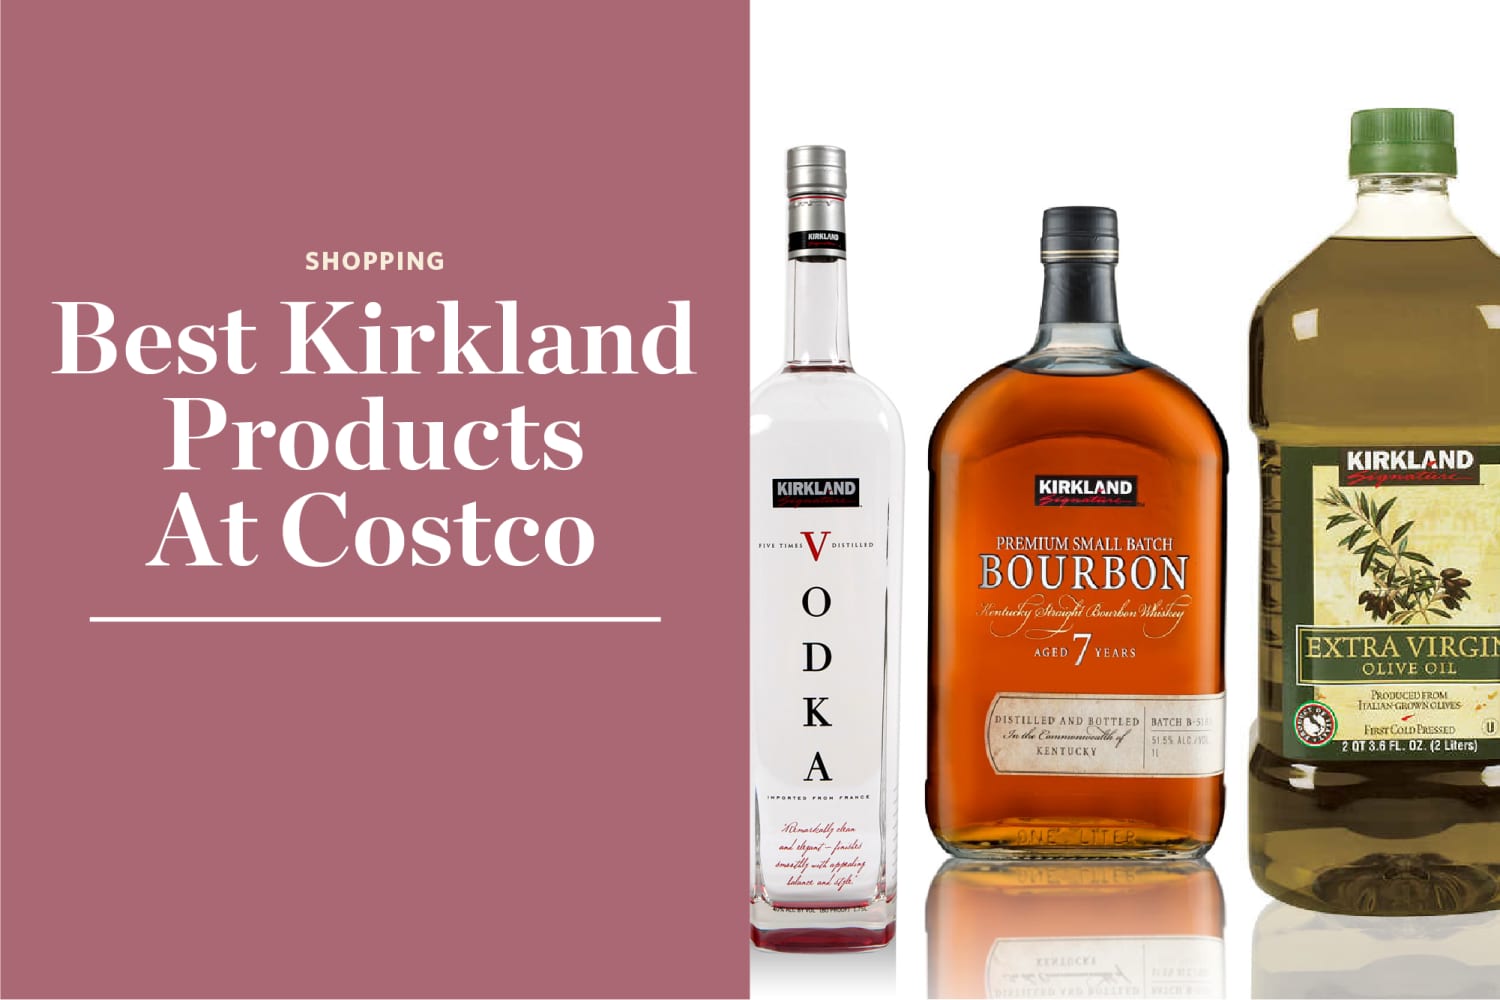 I 13 Best Kirkland Signature Products in Costco